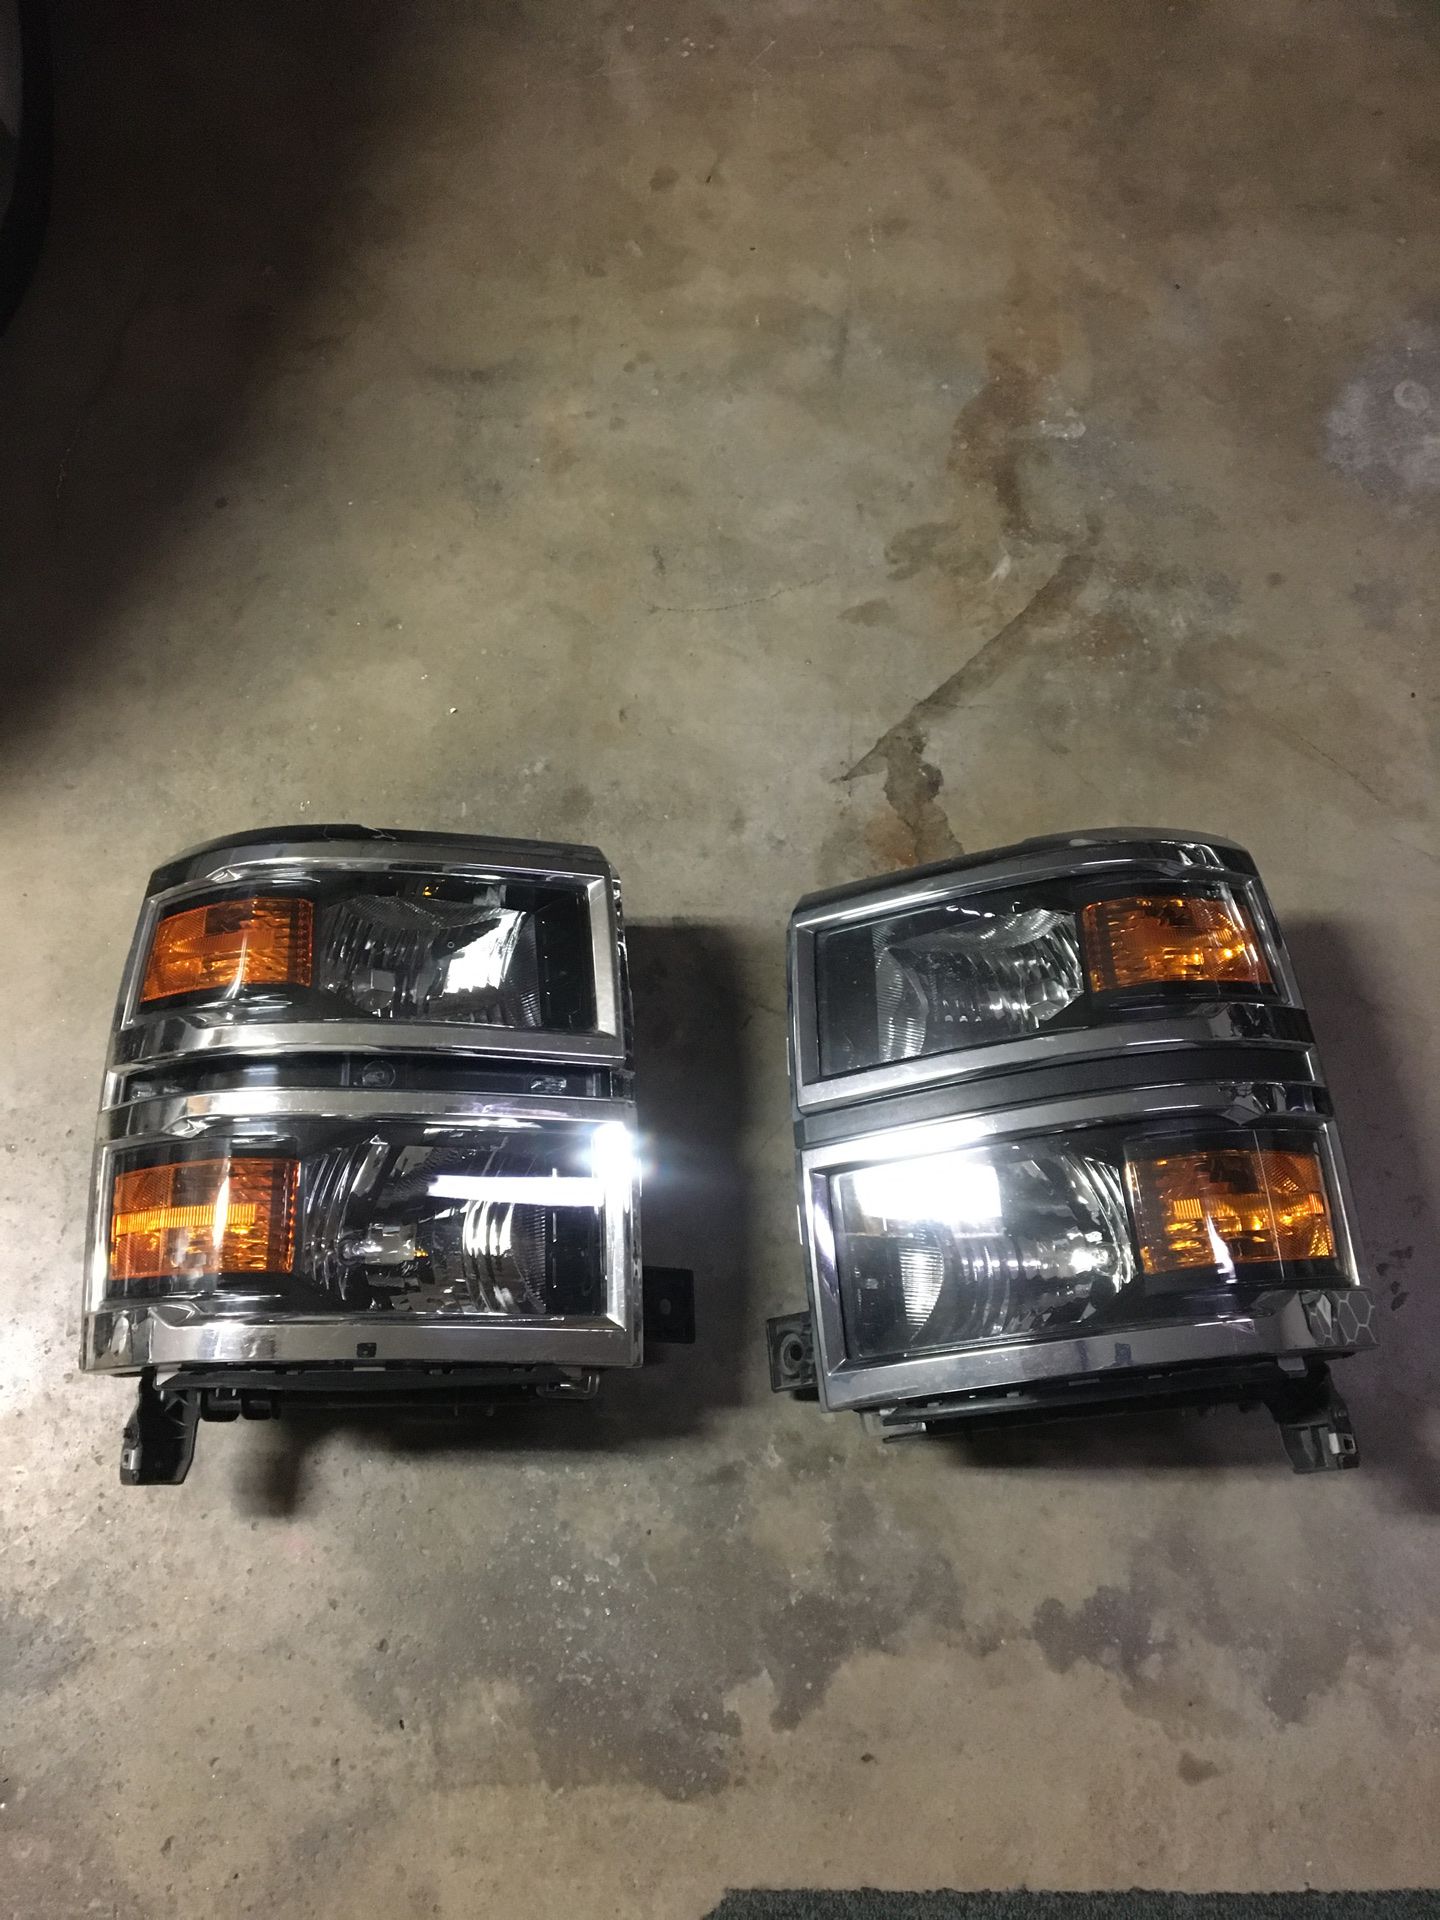 Chevy Silverado headlights.